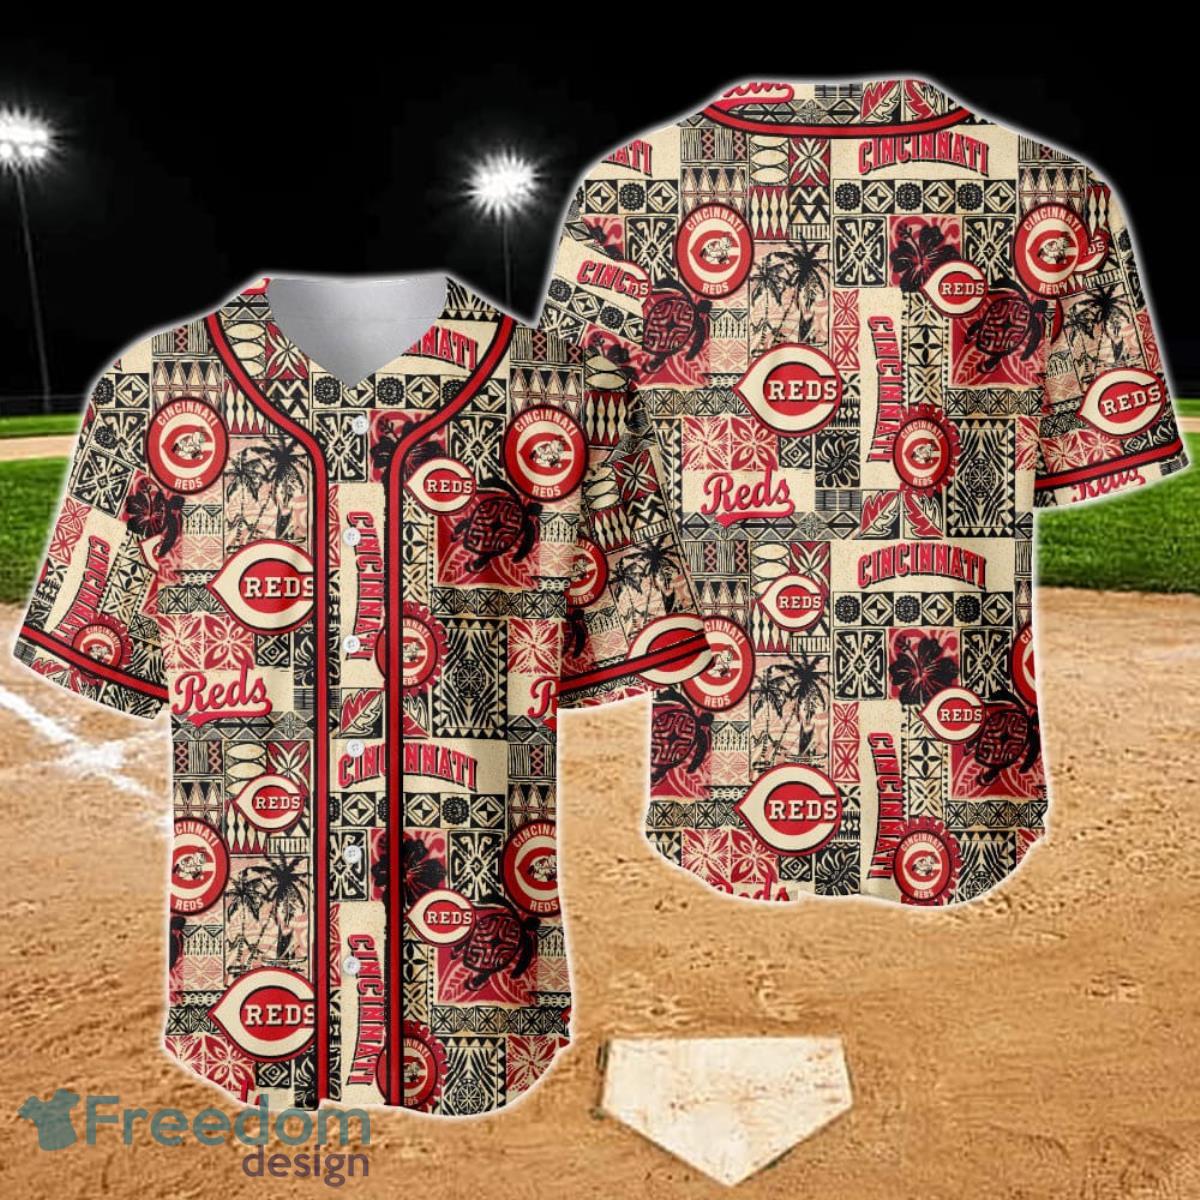 Cincinnati Reds Logo MLB Baseball Jersey Shirt For Men And Women -  Freedomdesign